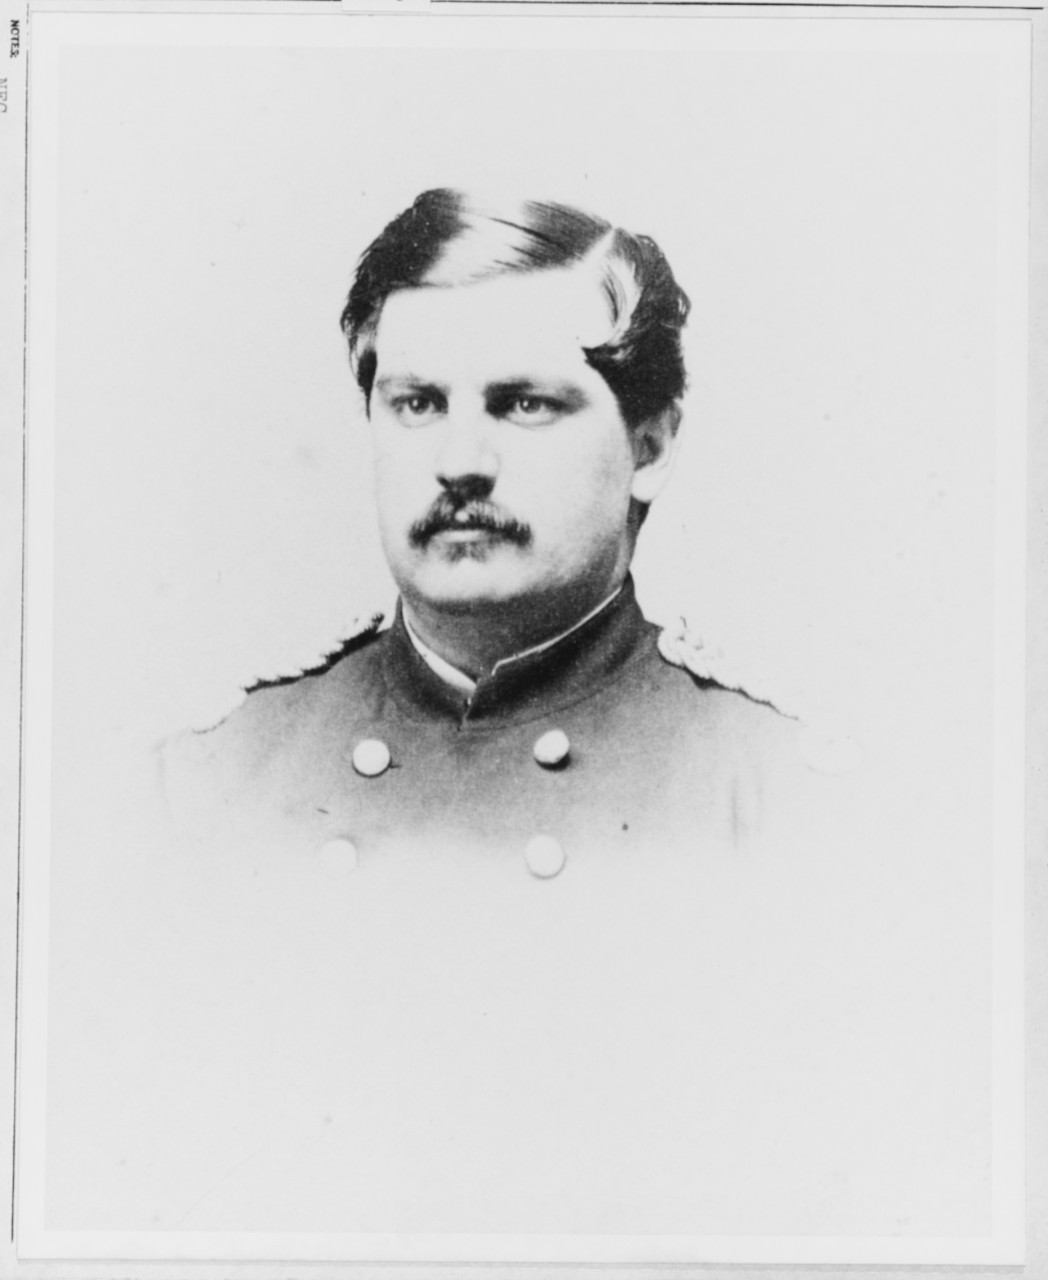 Lieutenant Henry J. Bishop